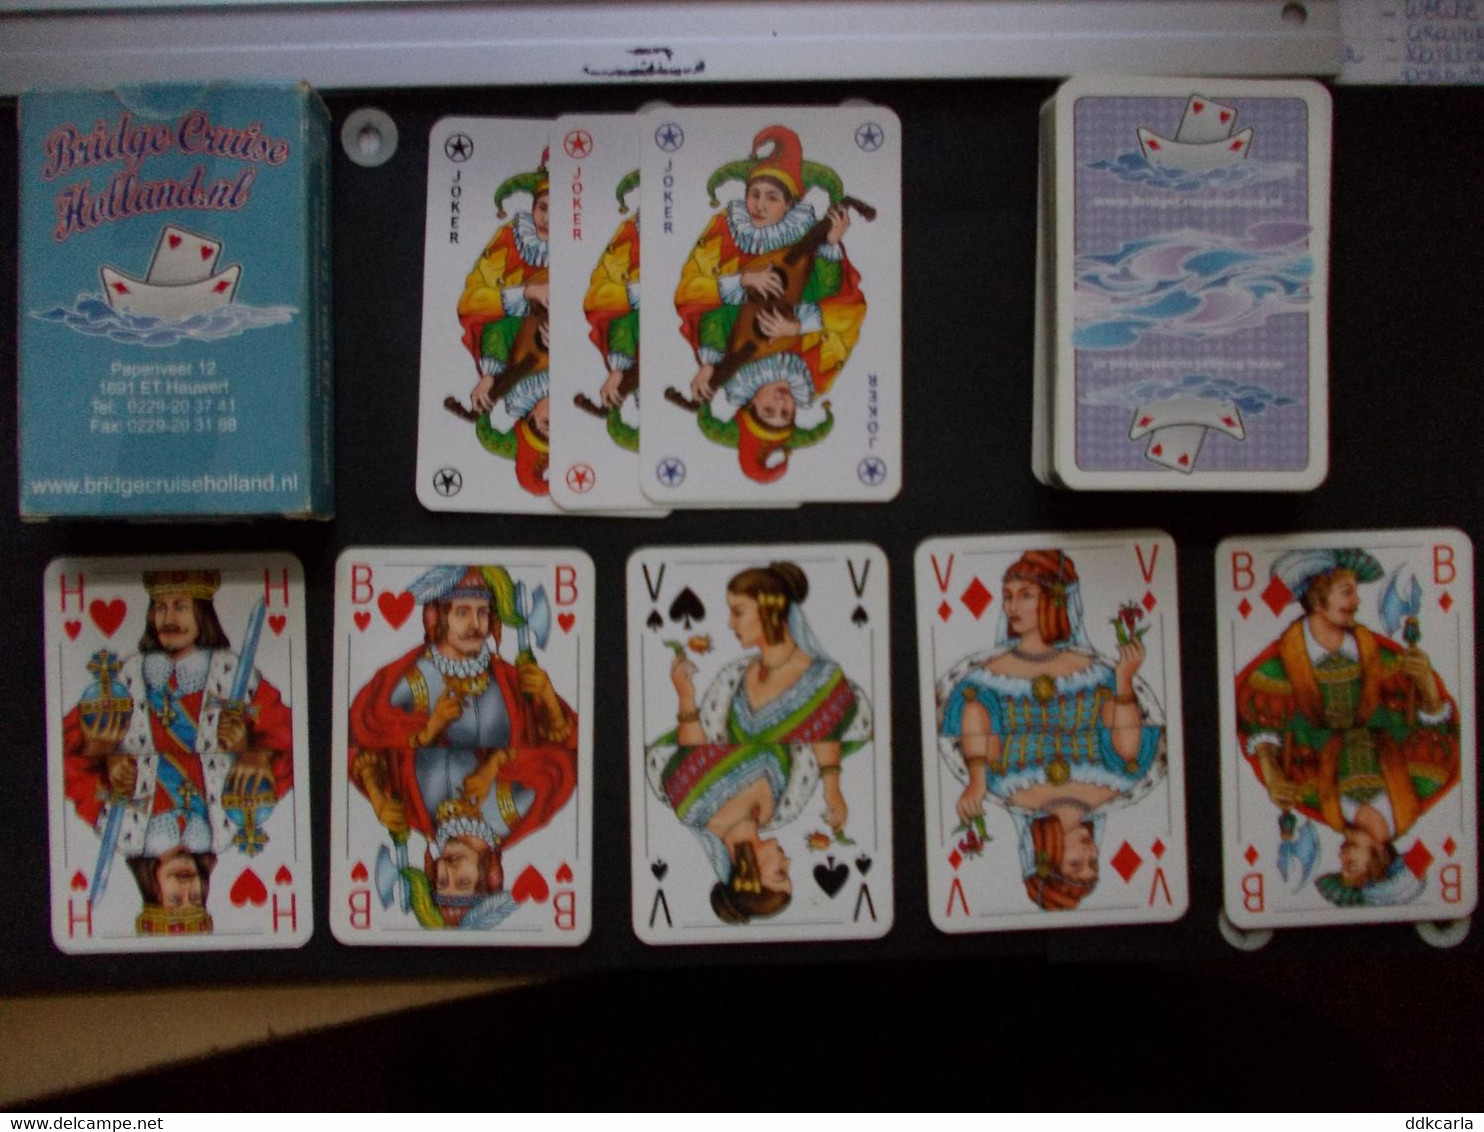 Speelkaarten - Jeu Des Cartes - Bridge Cruise Holland.nl - 52 Kaarten + 3 Jokers - 54 Karten